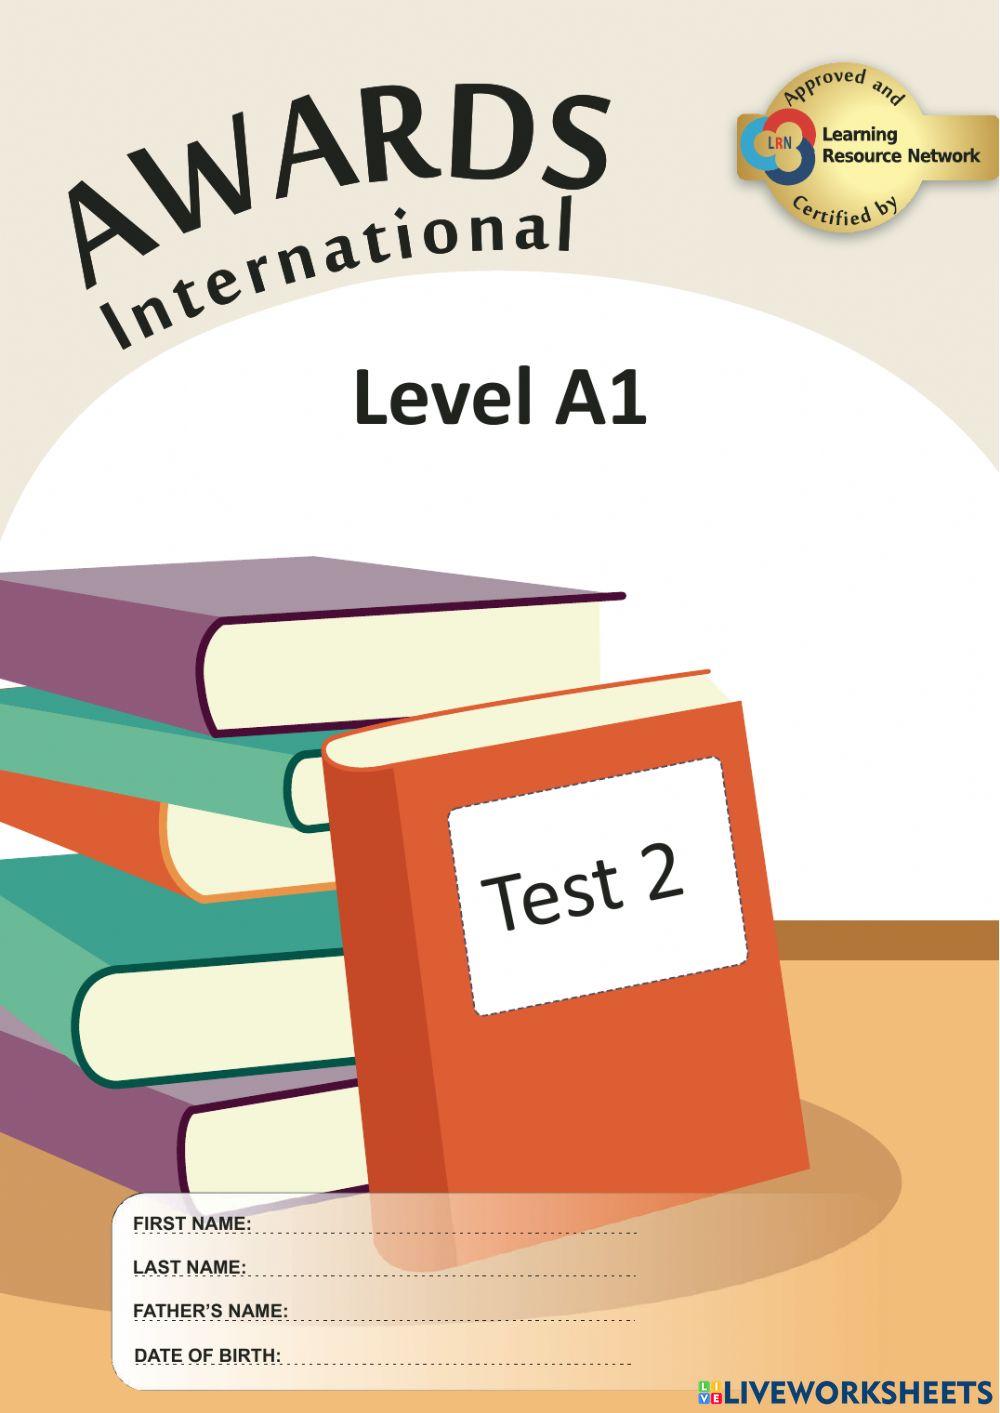 Awards Level A1 Test 2